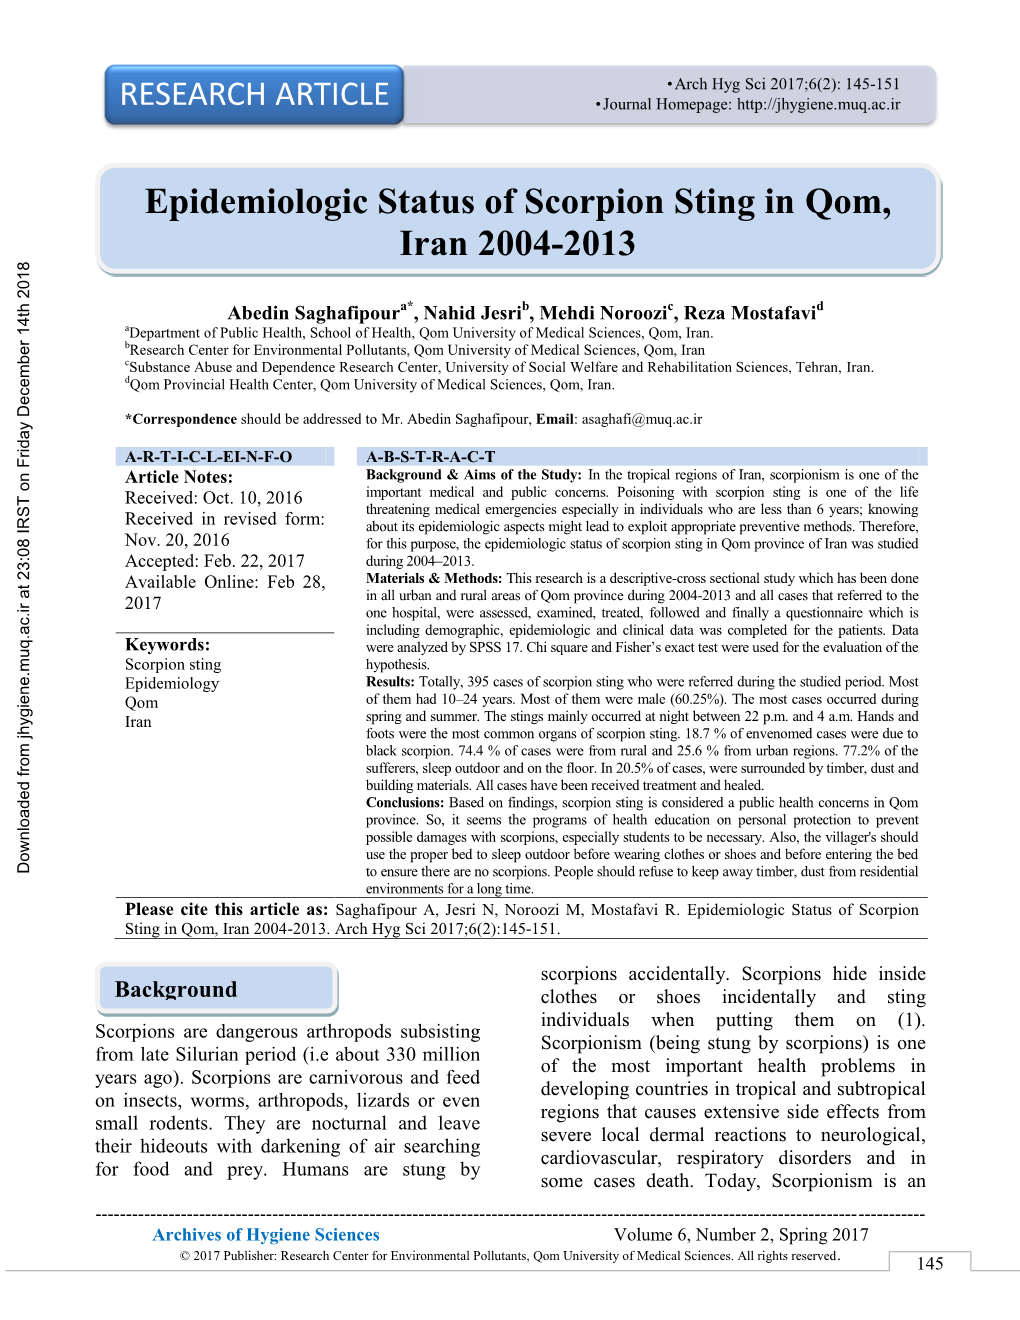 Epidemiologic Status of Scorpion Sting in Qom, Iran 2004-2013